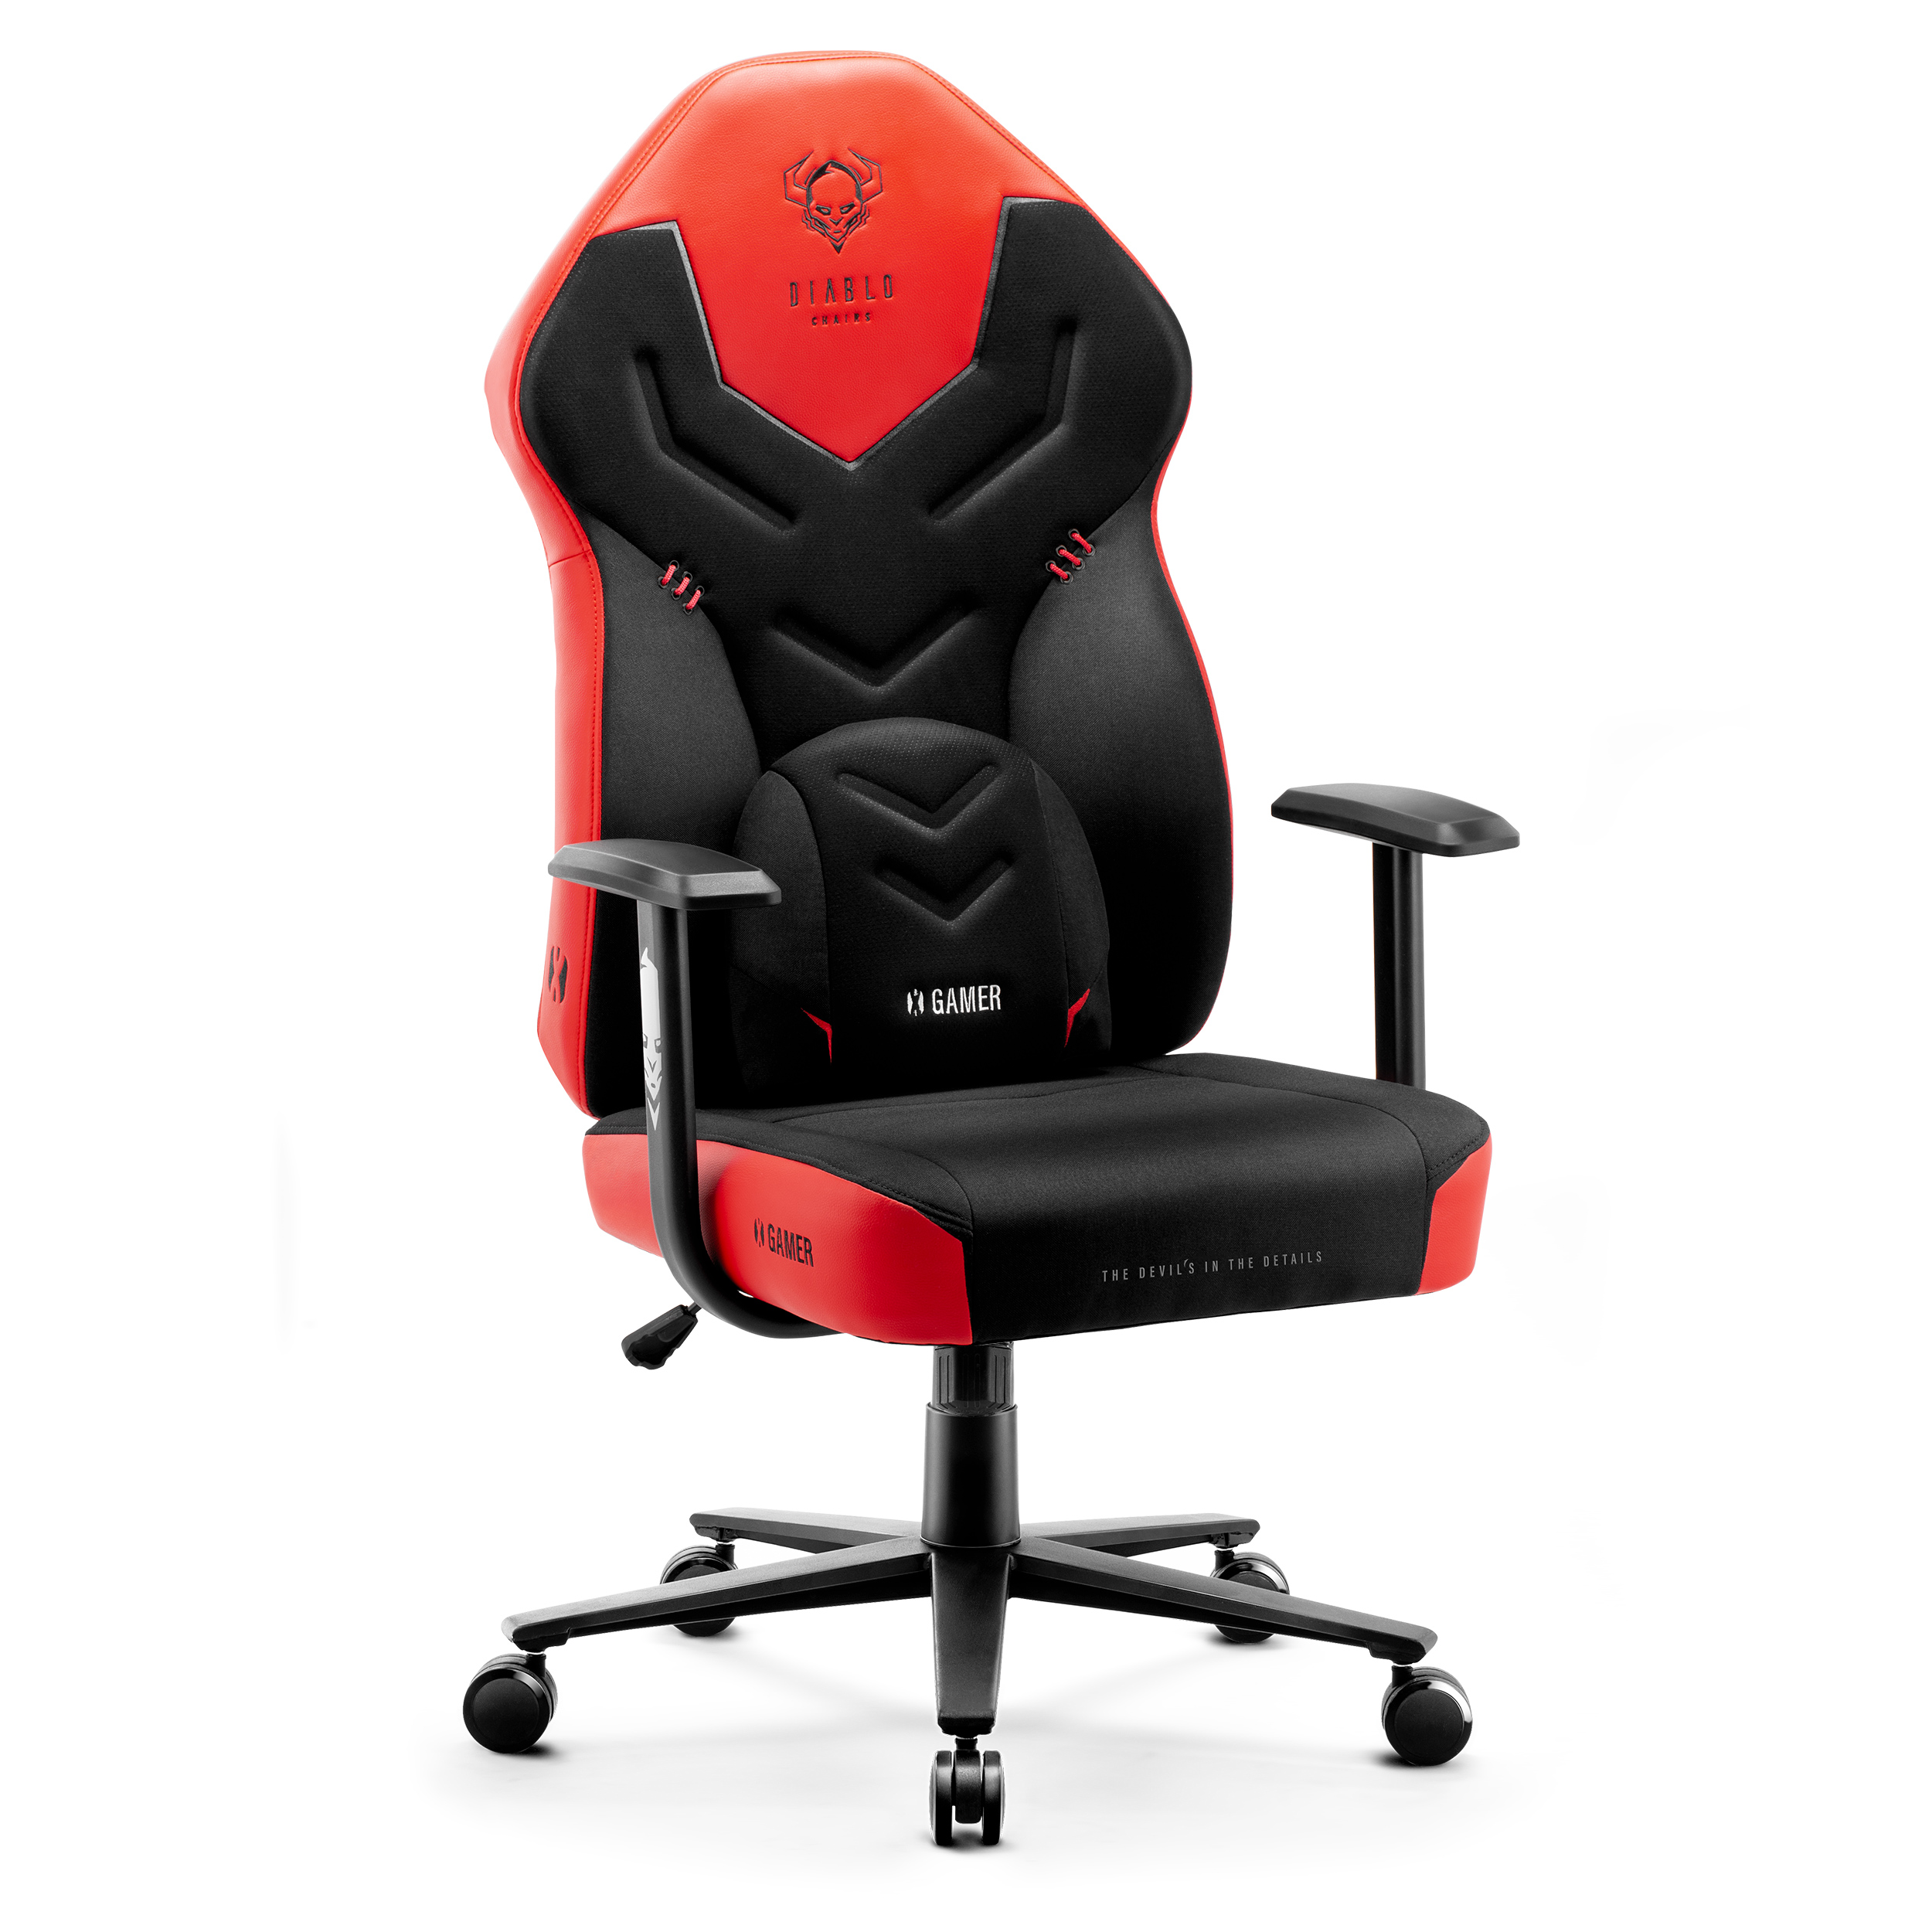 DIABLO CHAIRS GAMING STUHL NORMAL Chair, black/red 2.0 Gaming X-GAMER